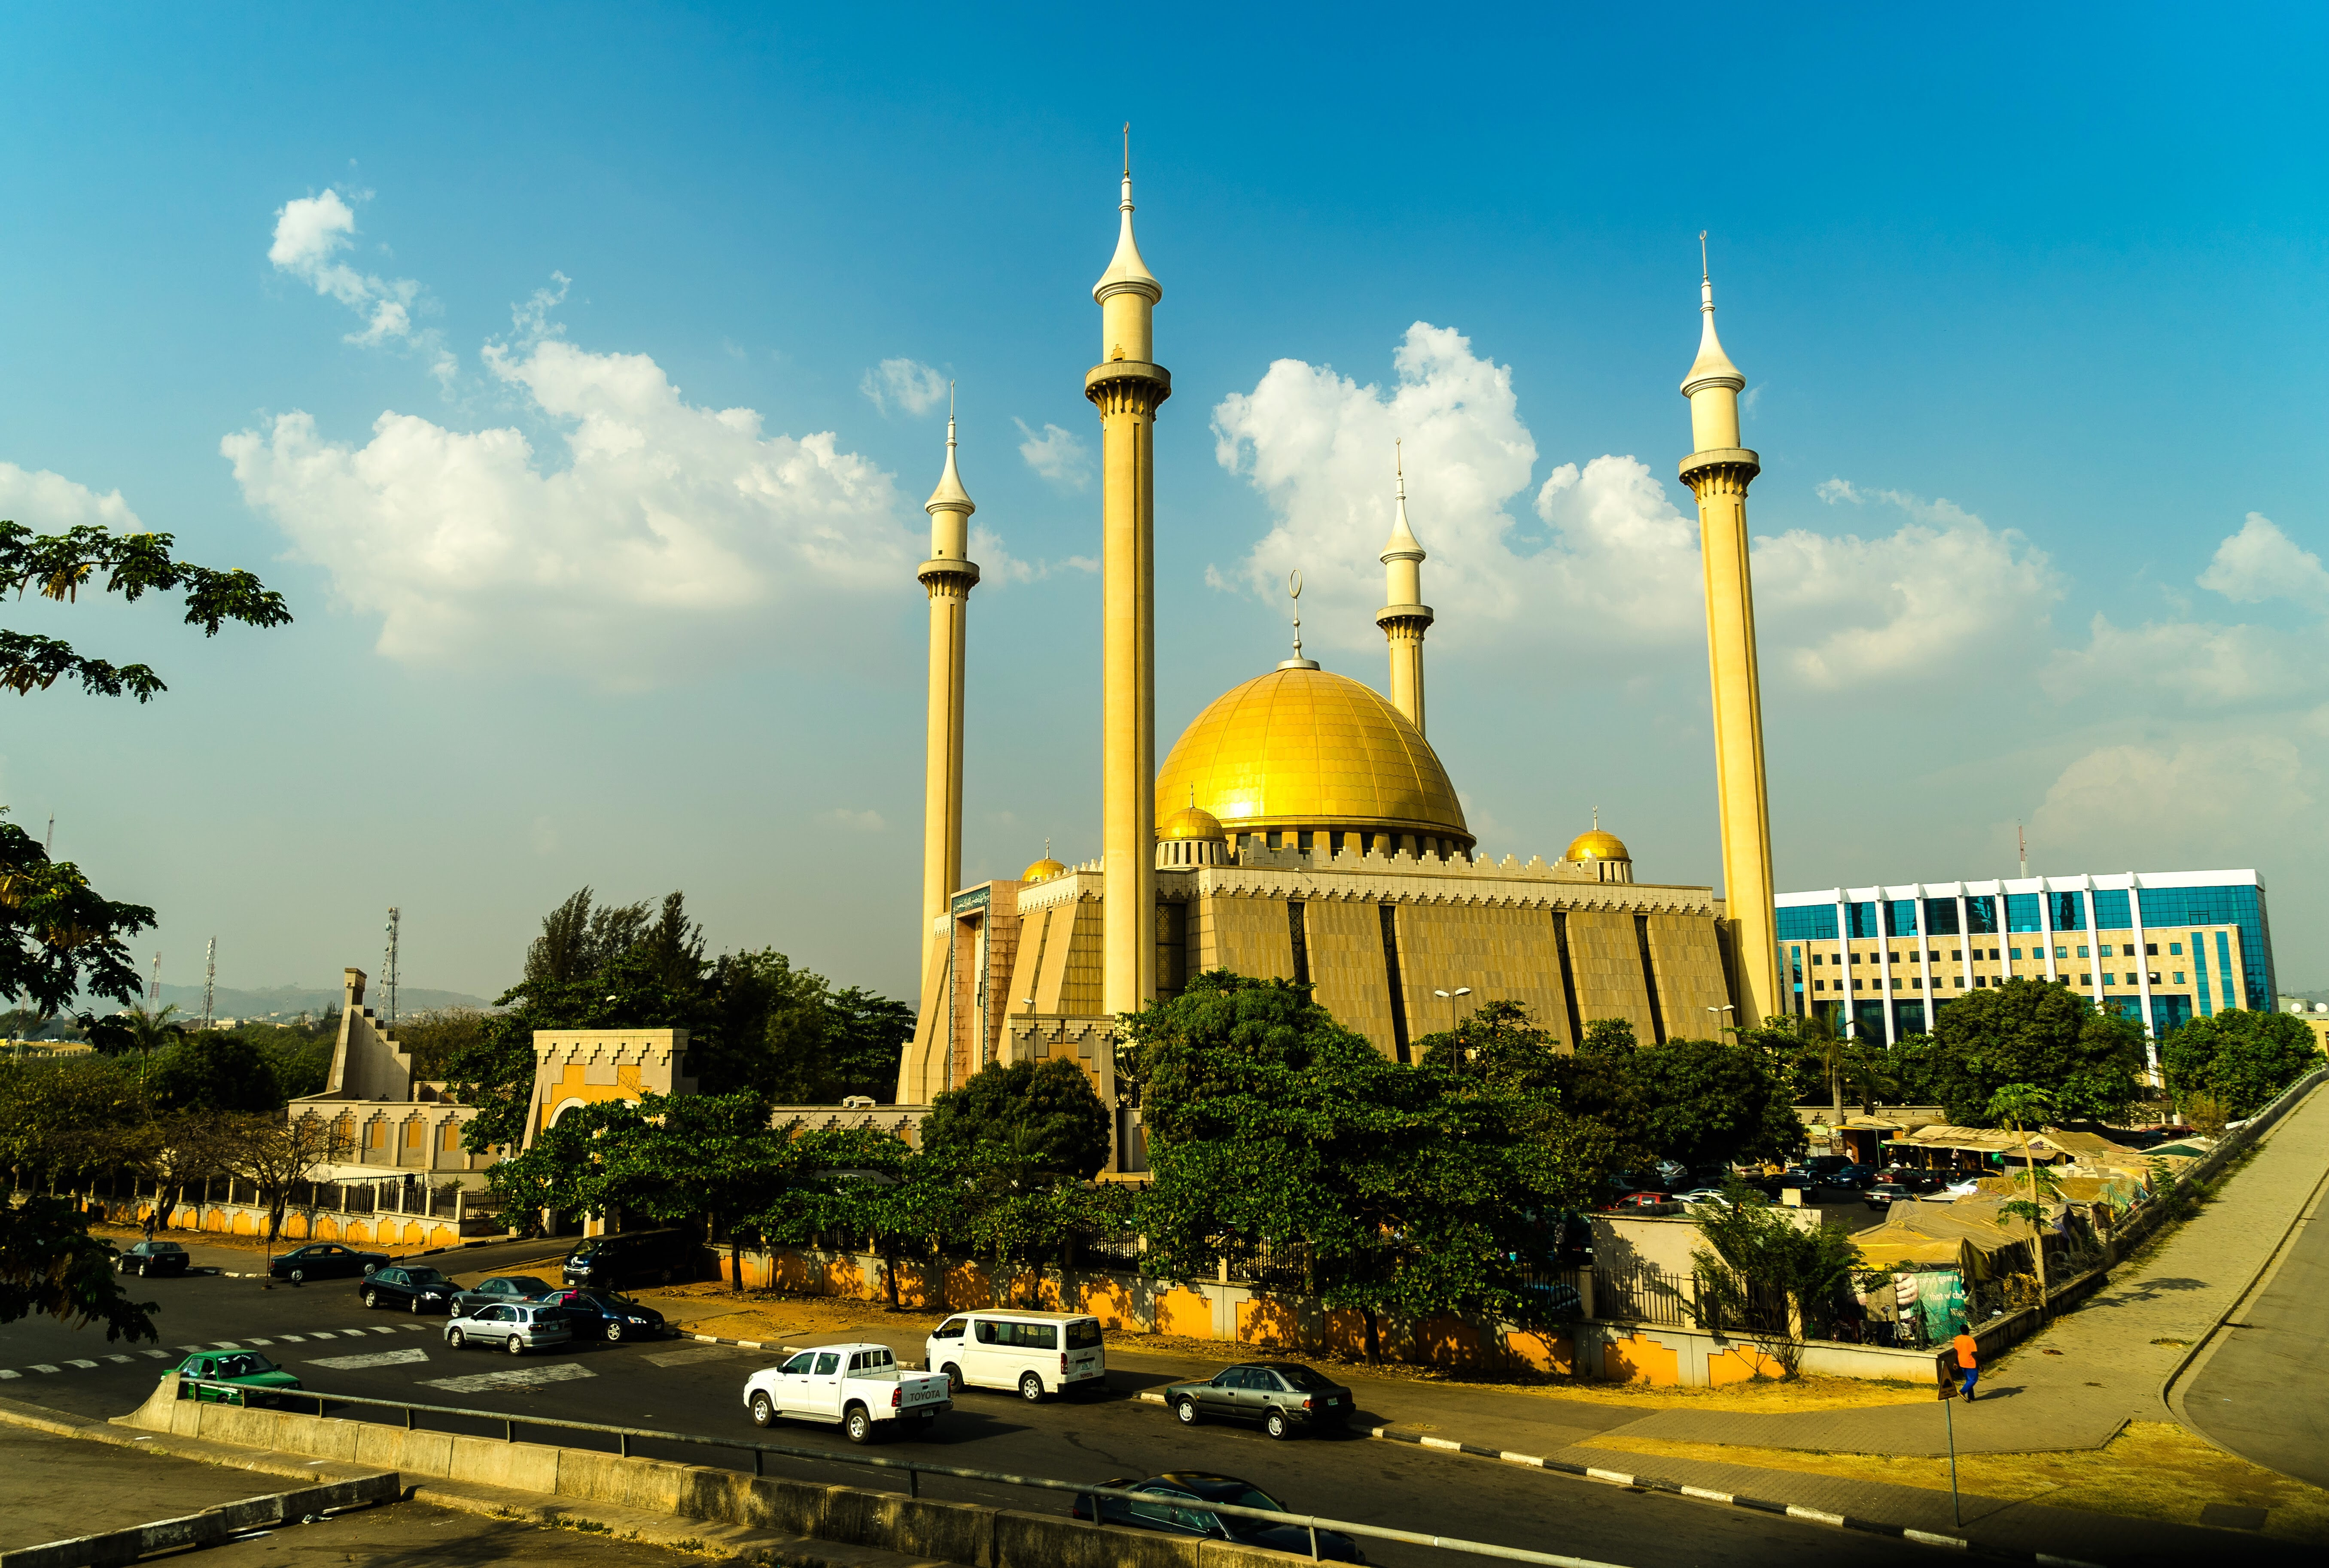  Nigerian National Mosque in Abuja, Nigeria. (Mark Fischer, Creative Commons)